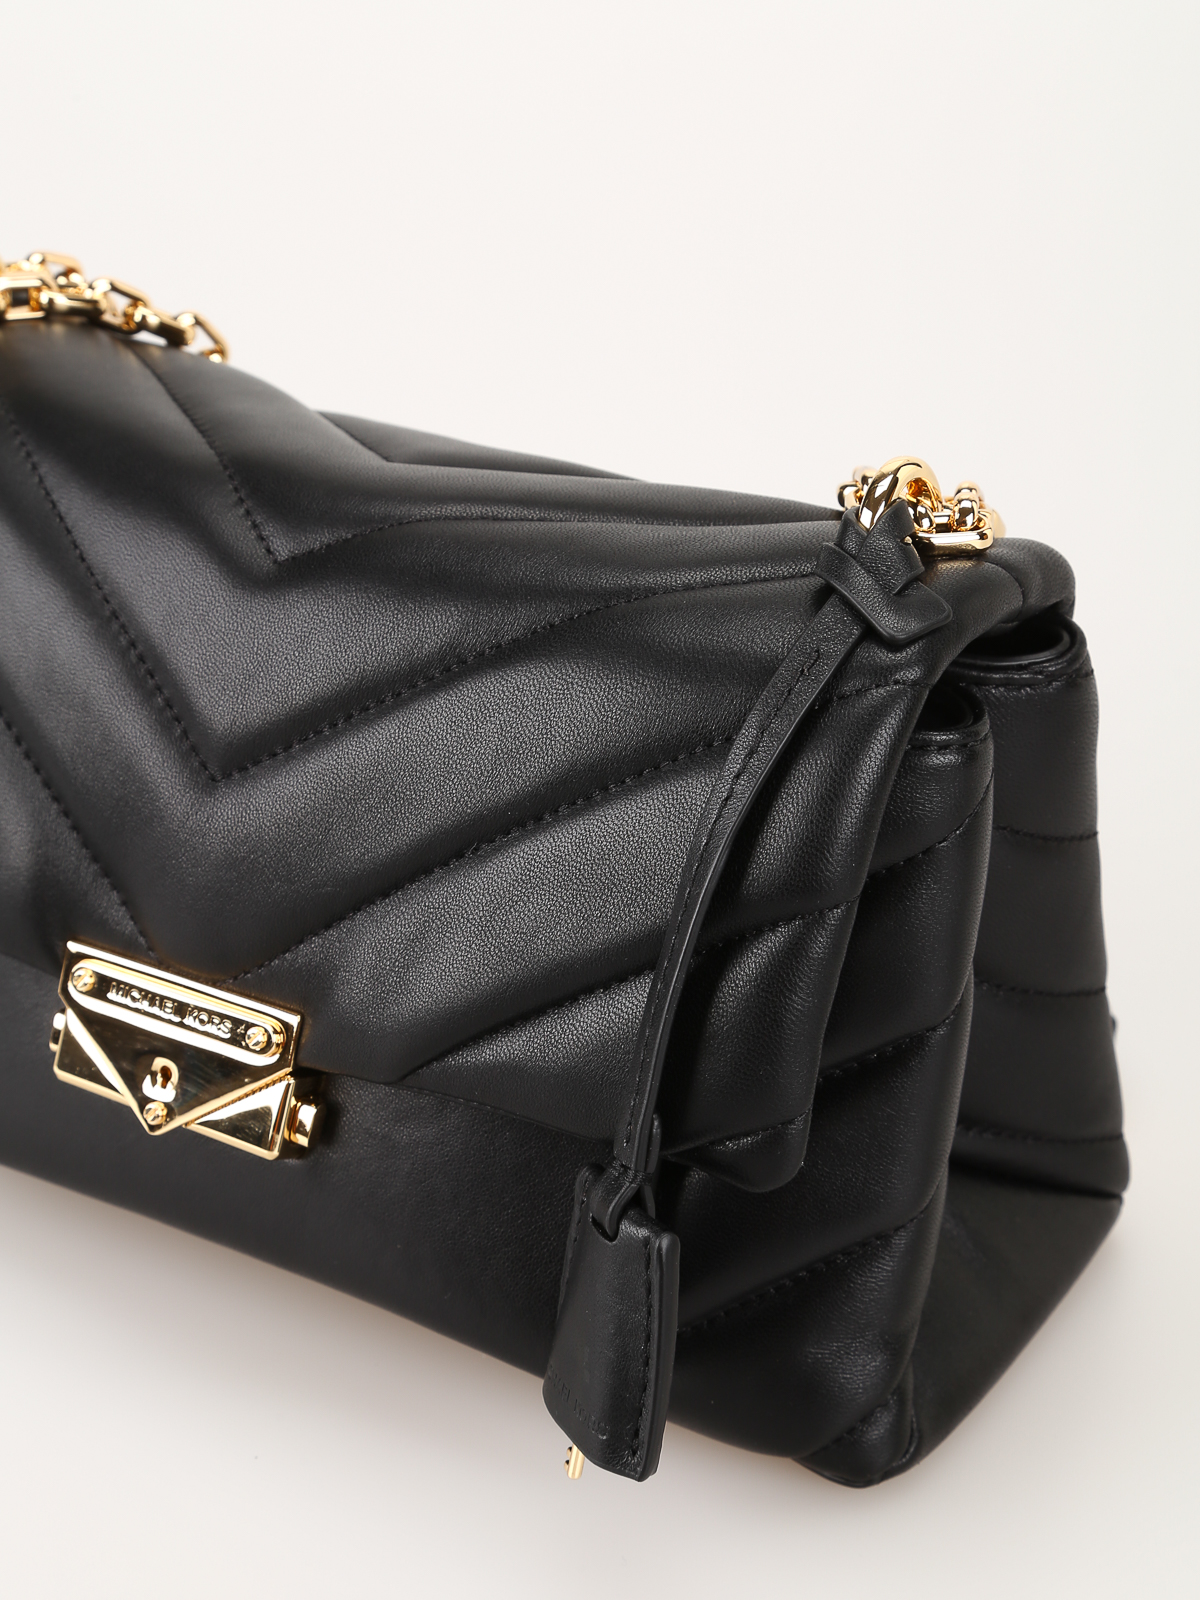 Michael Kors CeCe Leather Medium Chain Shoulder Bag in Truffle Handbags  Amazoncom